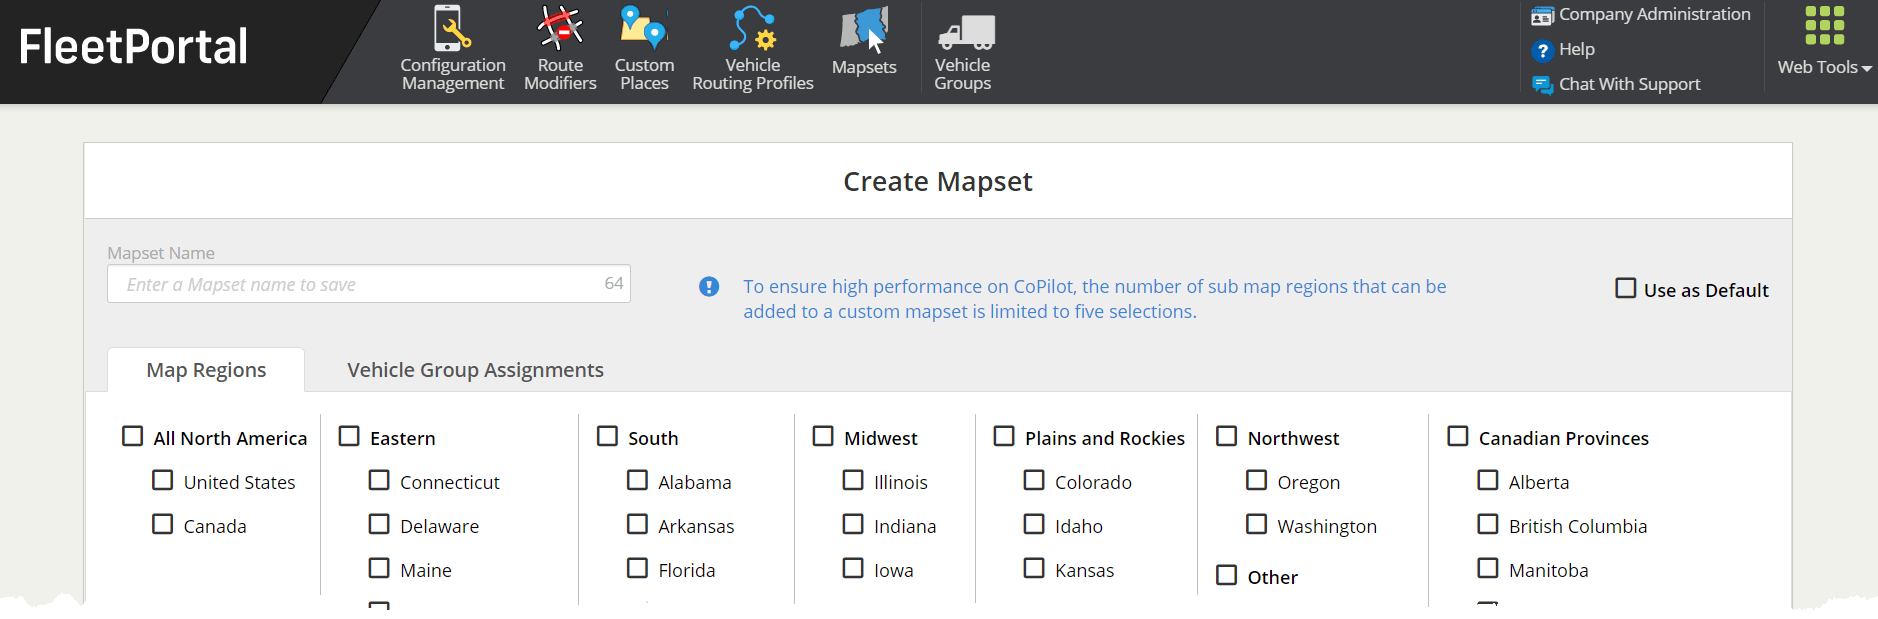 Create Mapset